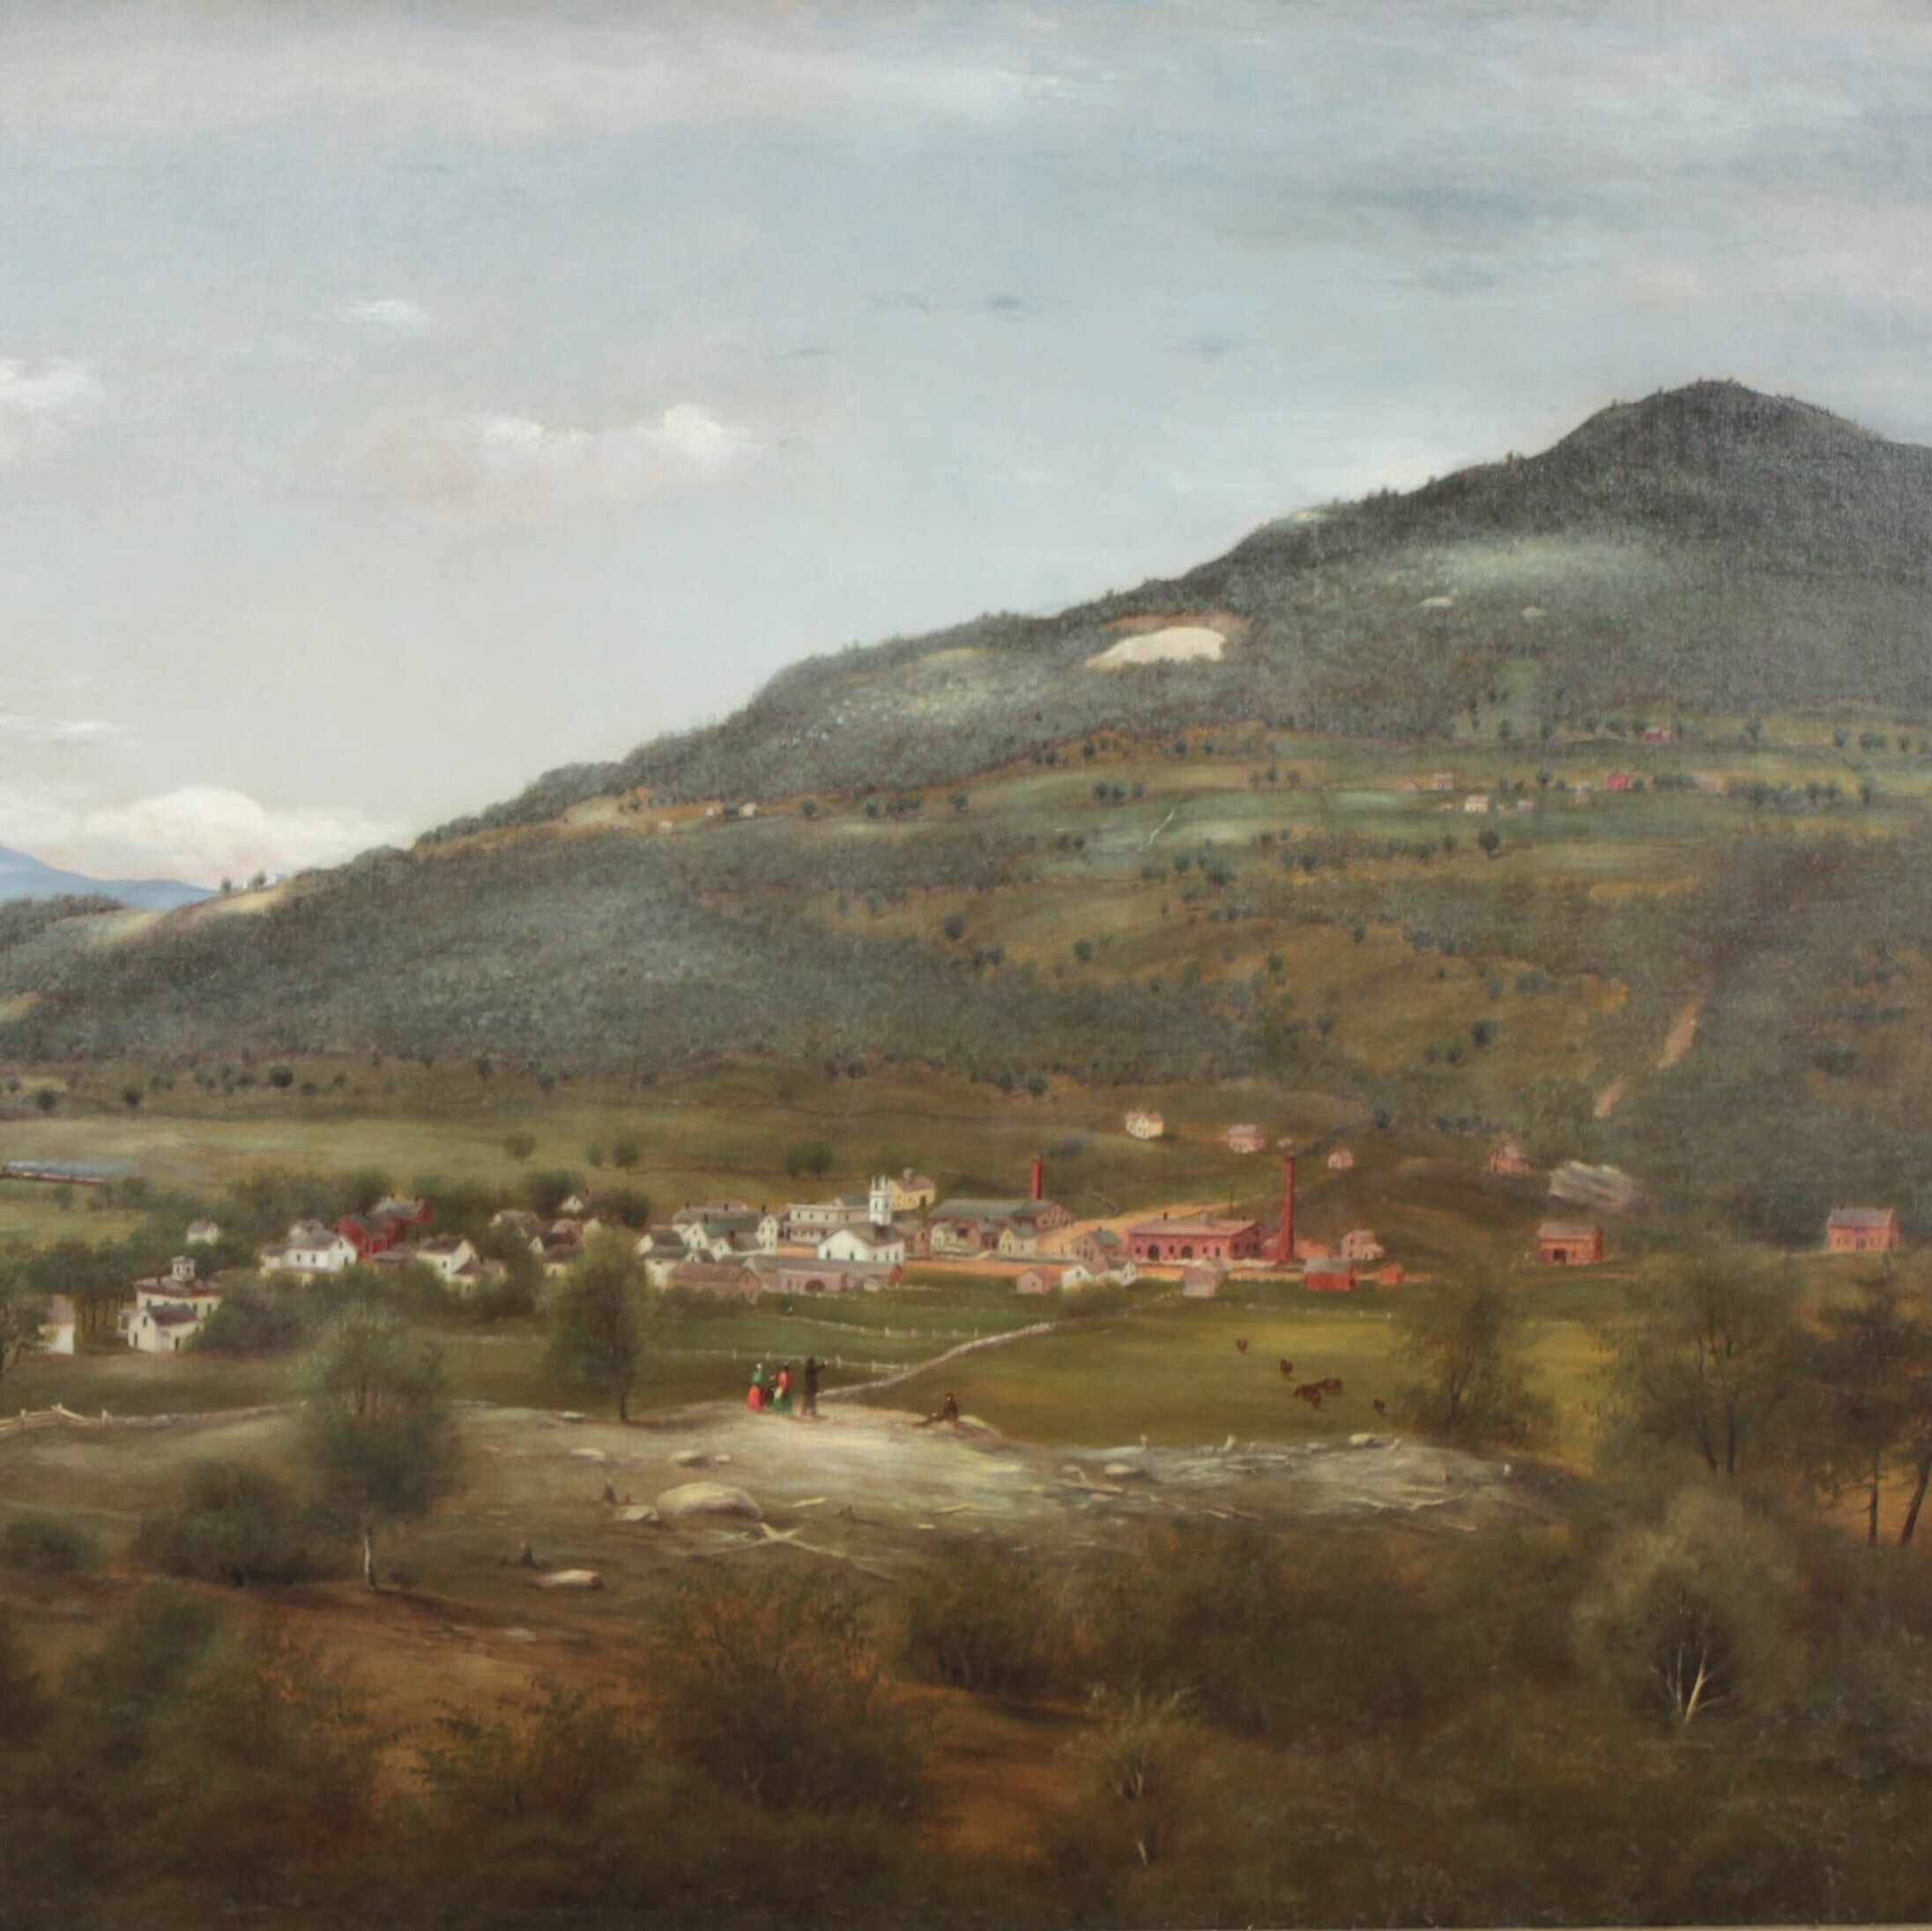 painting of Dorset, VT